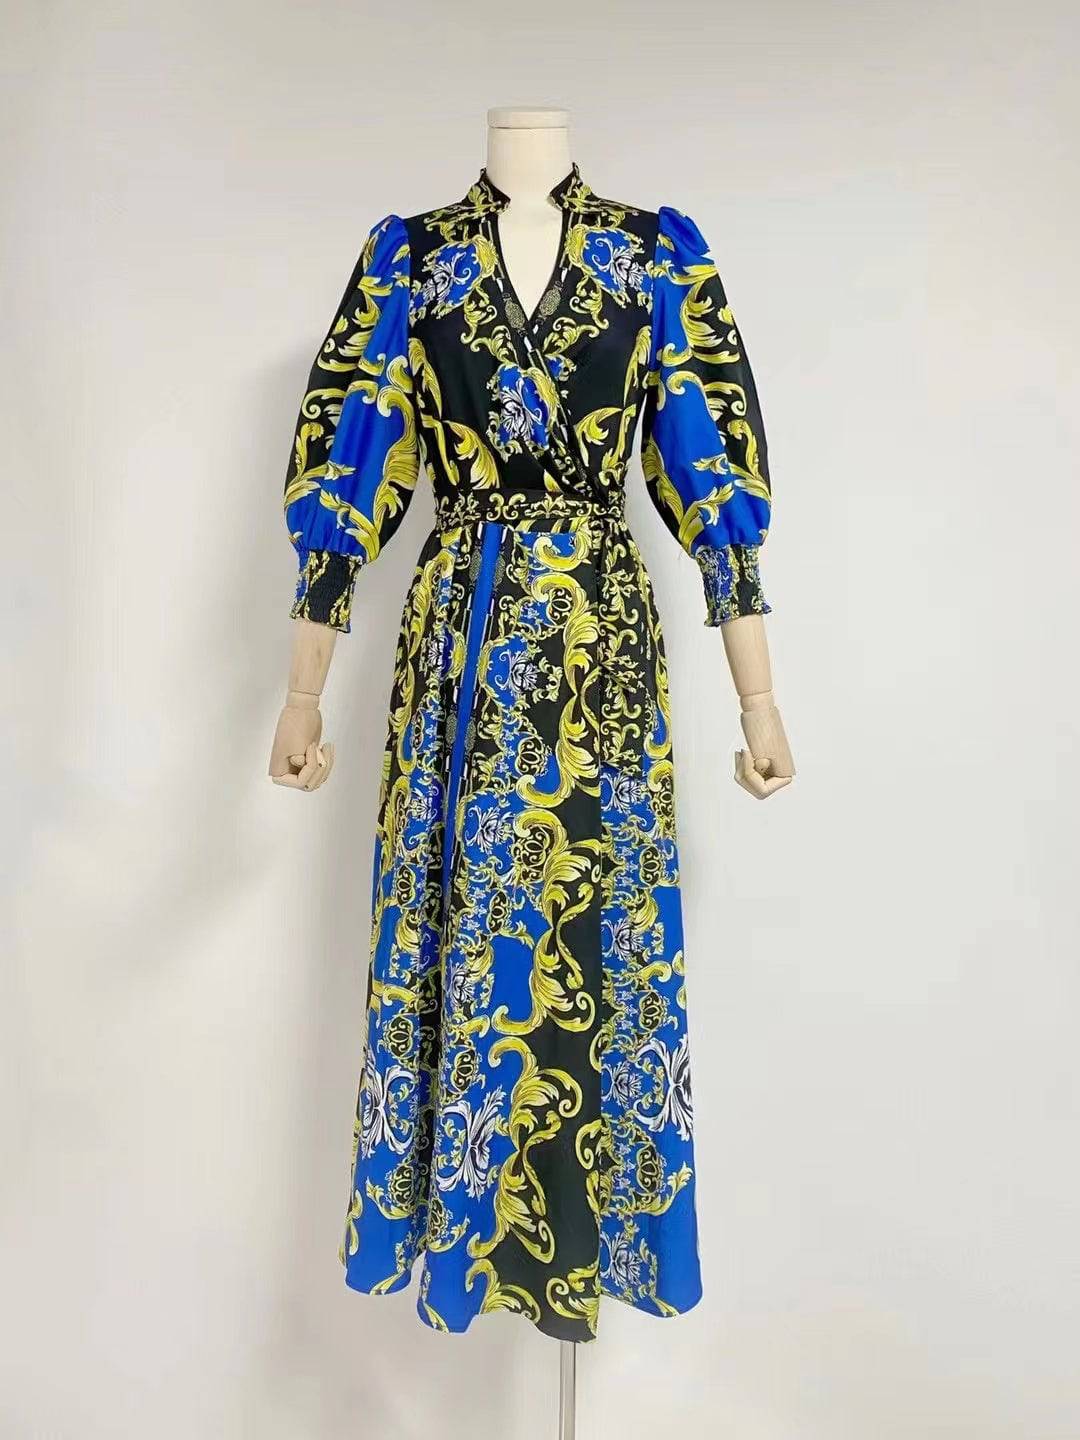 Camira Bold Print Wrap Maxi Shirt Dress - Hot fashionista